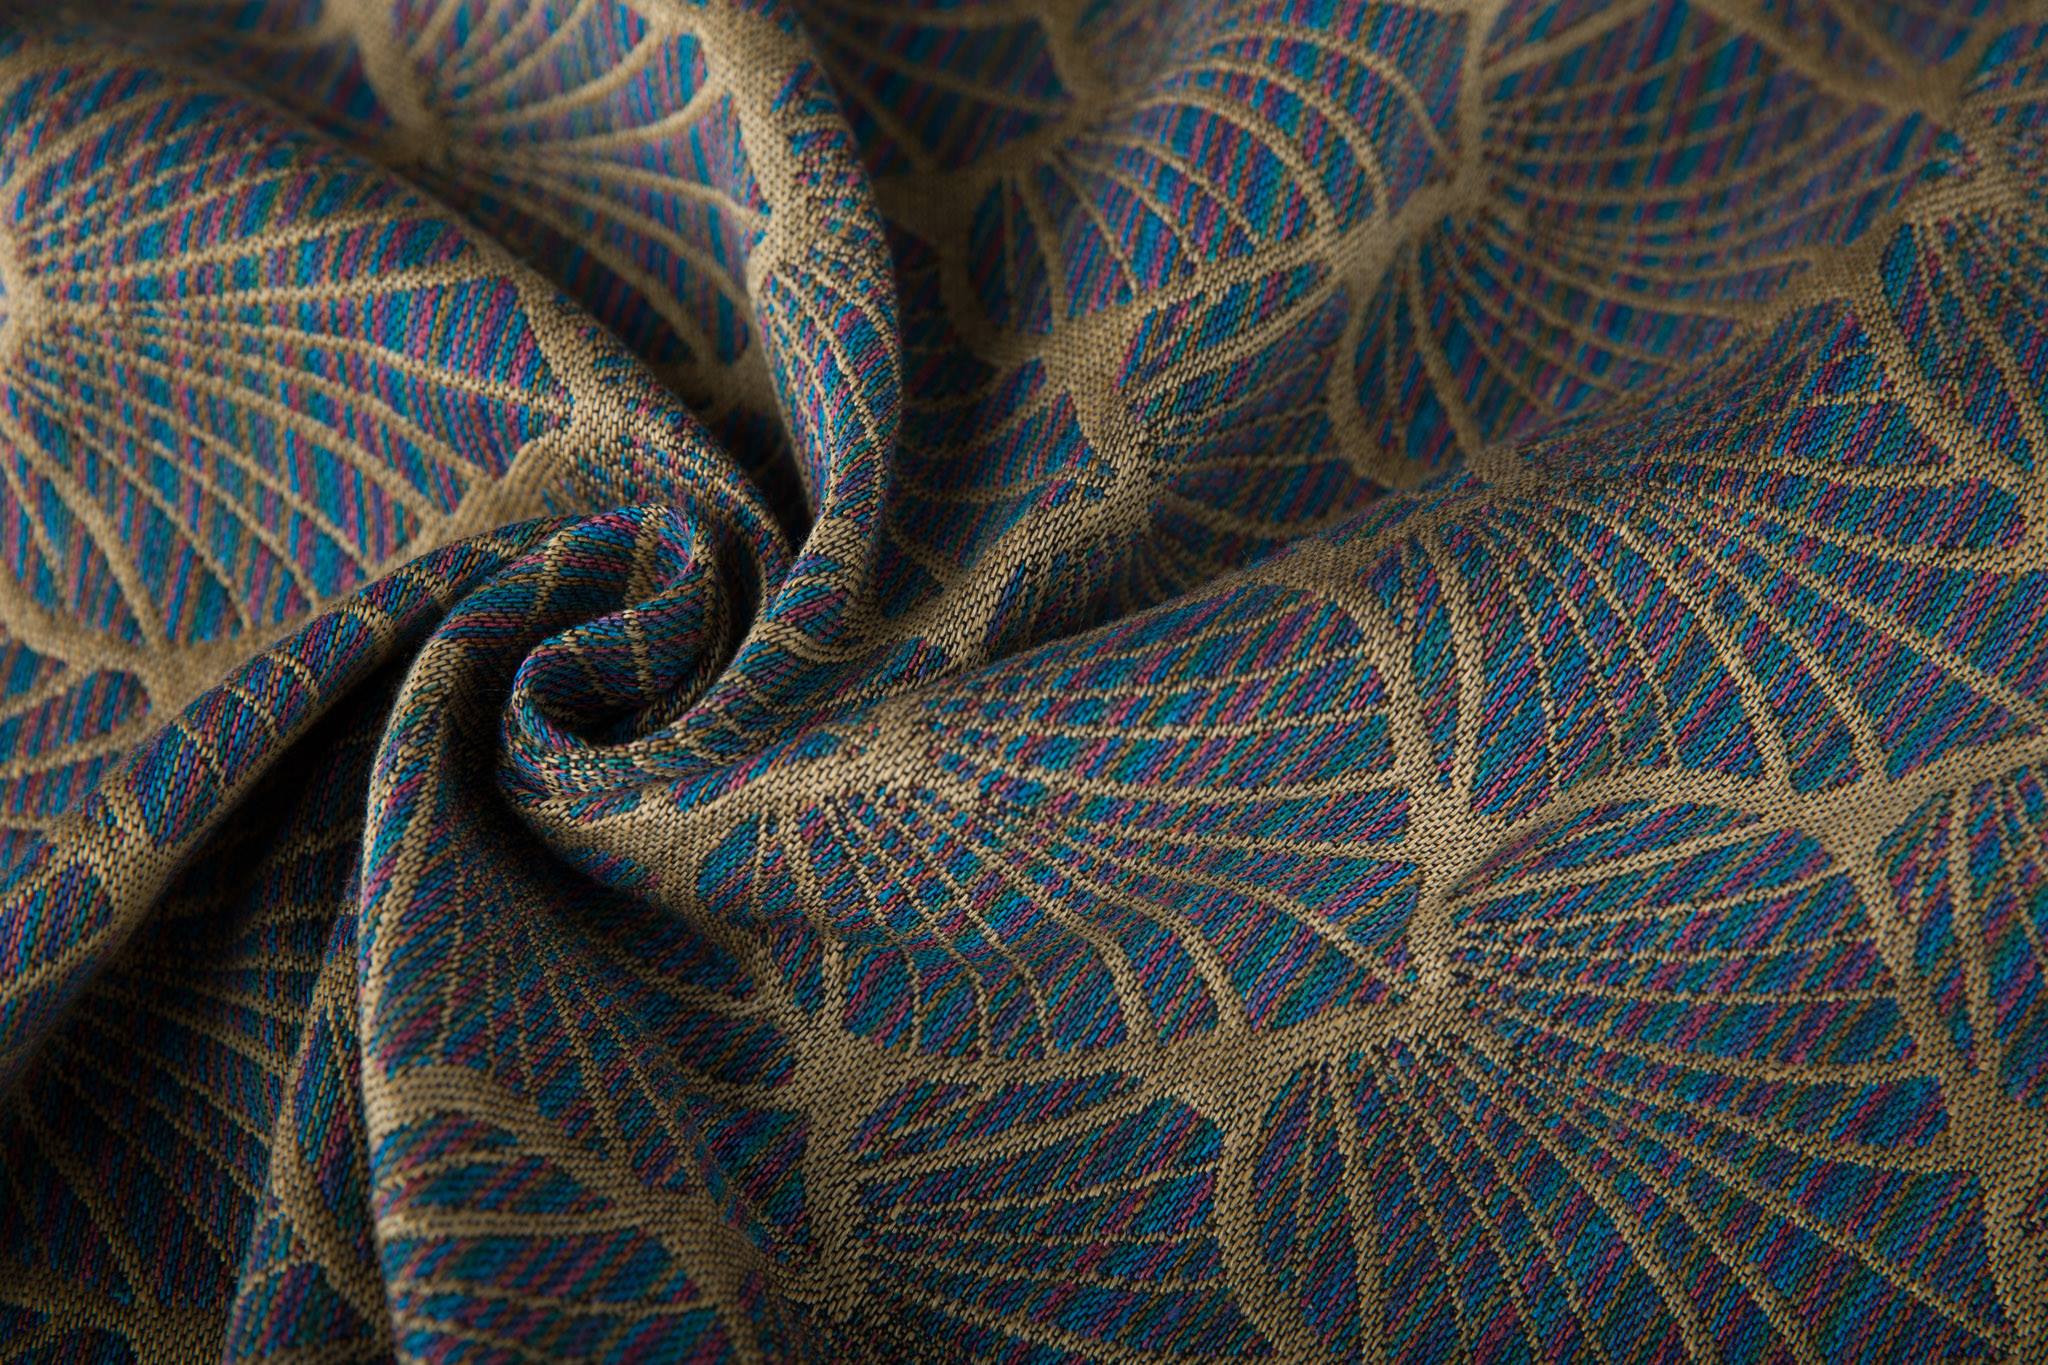 Linuschka Ipomée Ipomee Arcobaleno Wrap (japanese silk, linen) Image